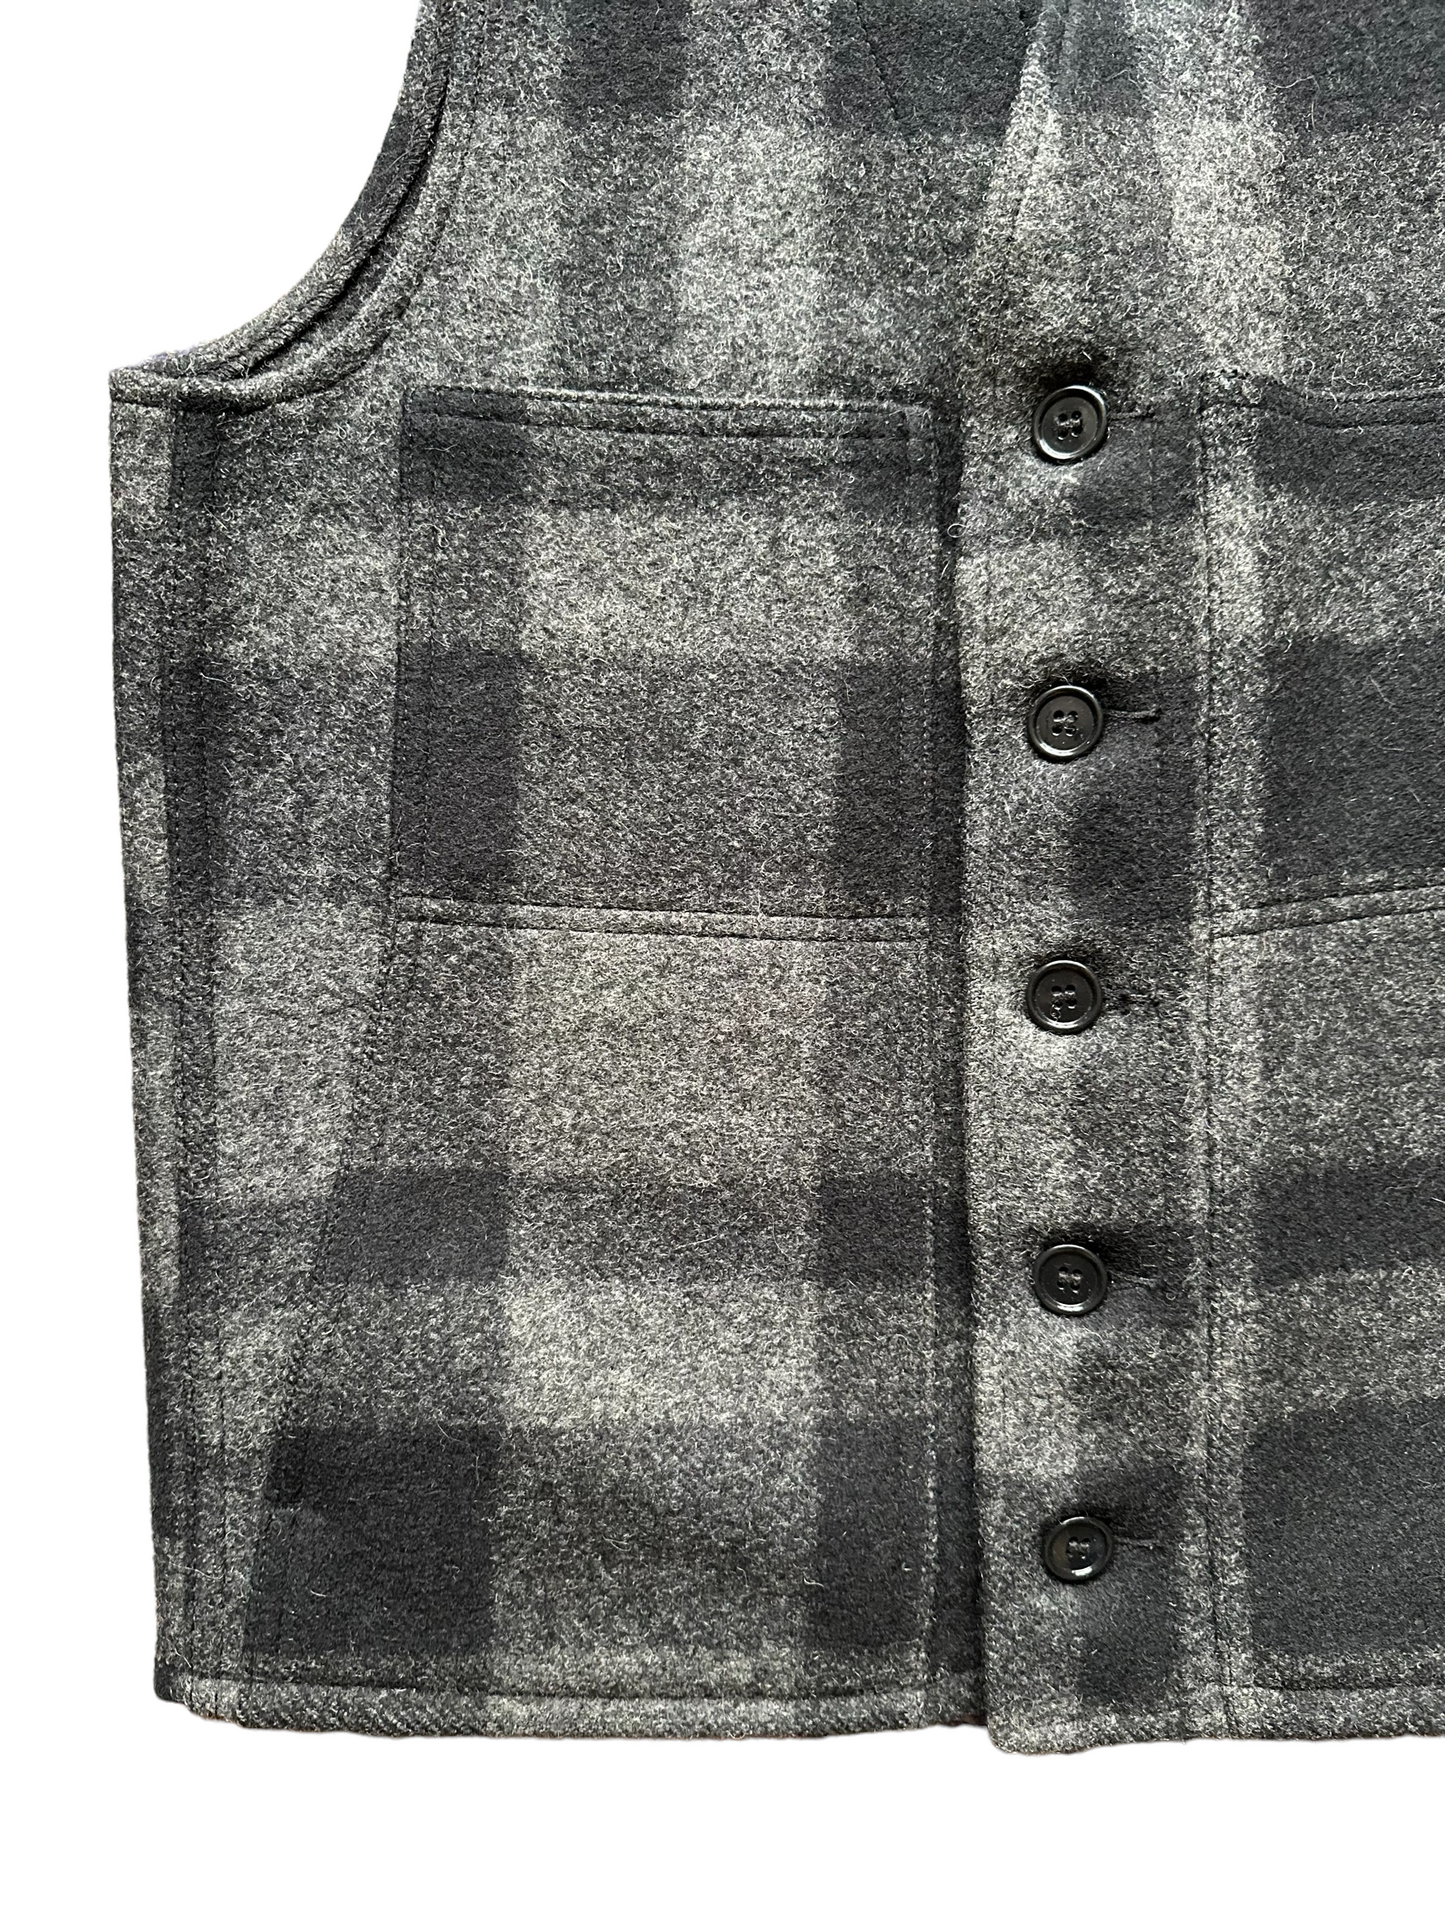 Lower Right Pocket View of Vintage Filson Mackinaw Vest SZ 36 |  Charcoal & Black Mackinaw Wool | Filson Seattle Workwear